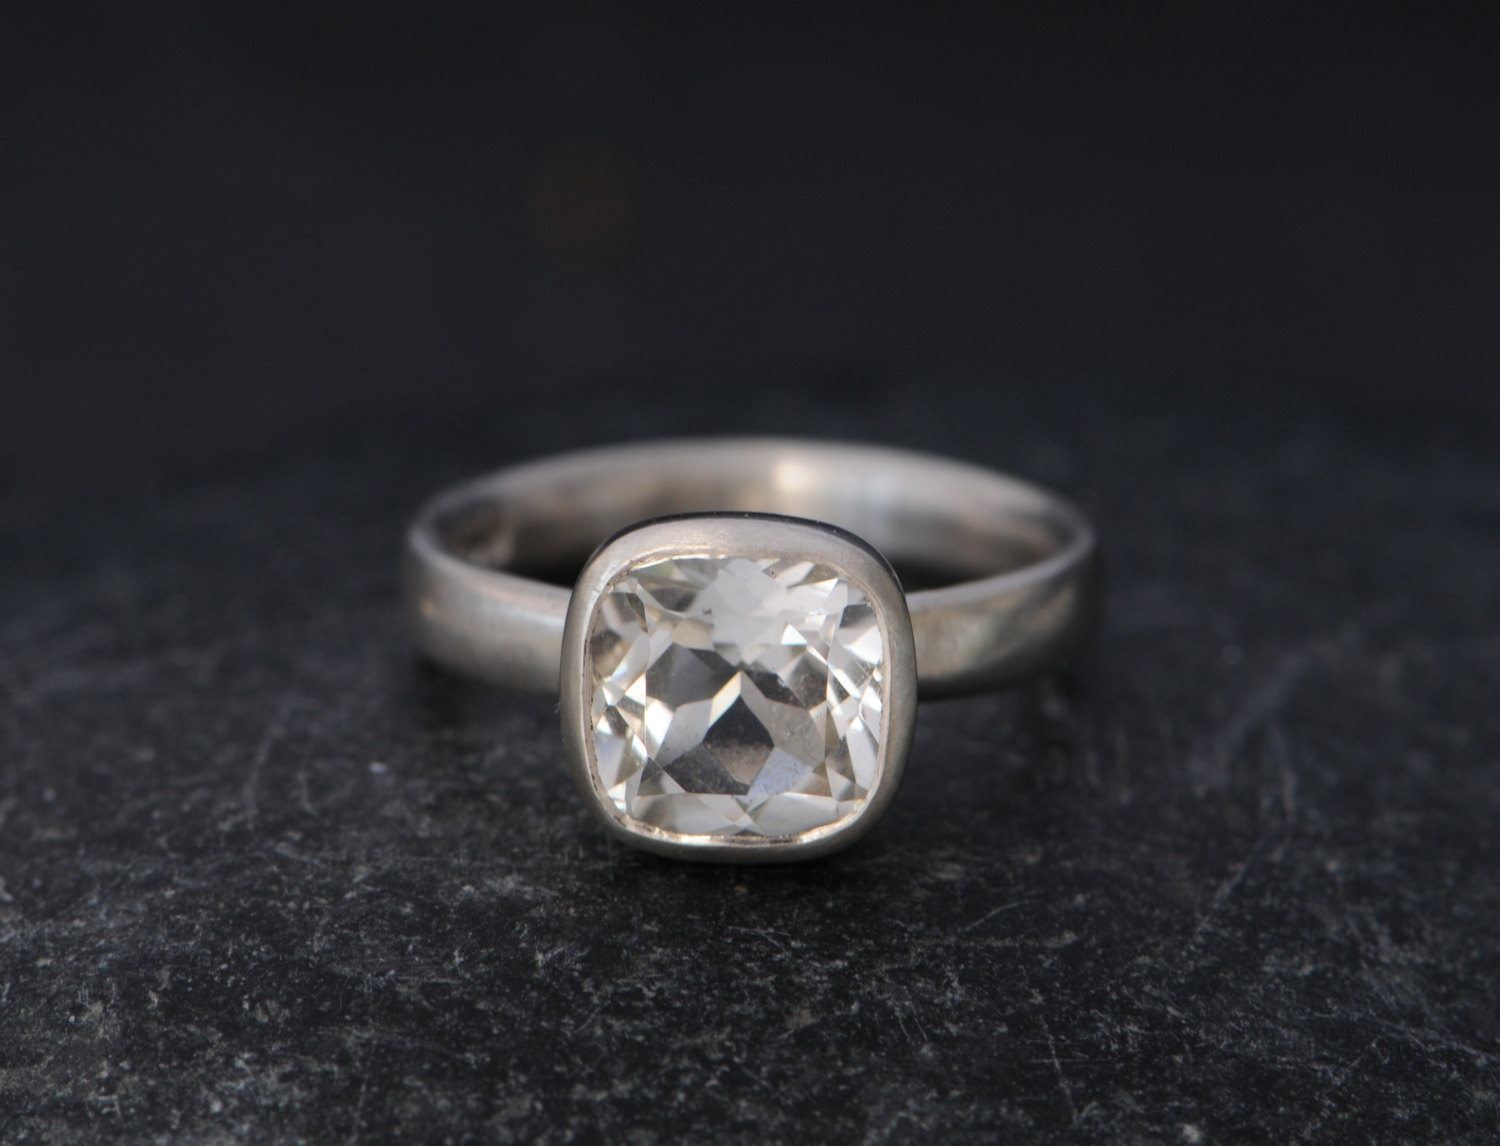 white topaz square stone set in sterling silver ring